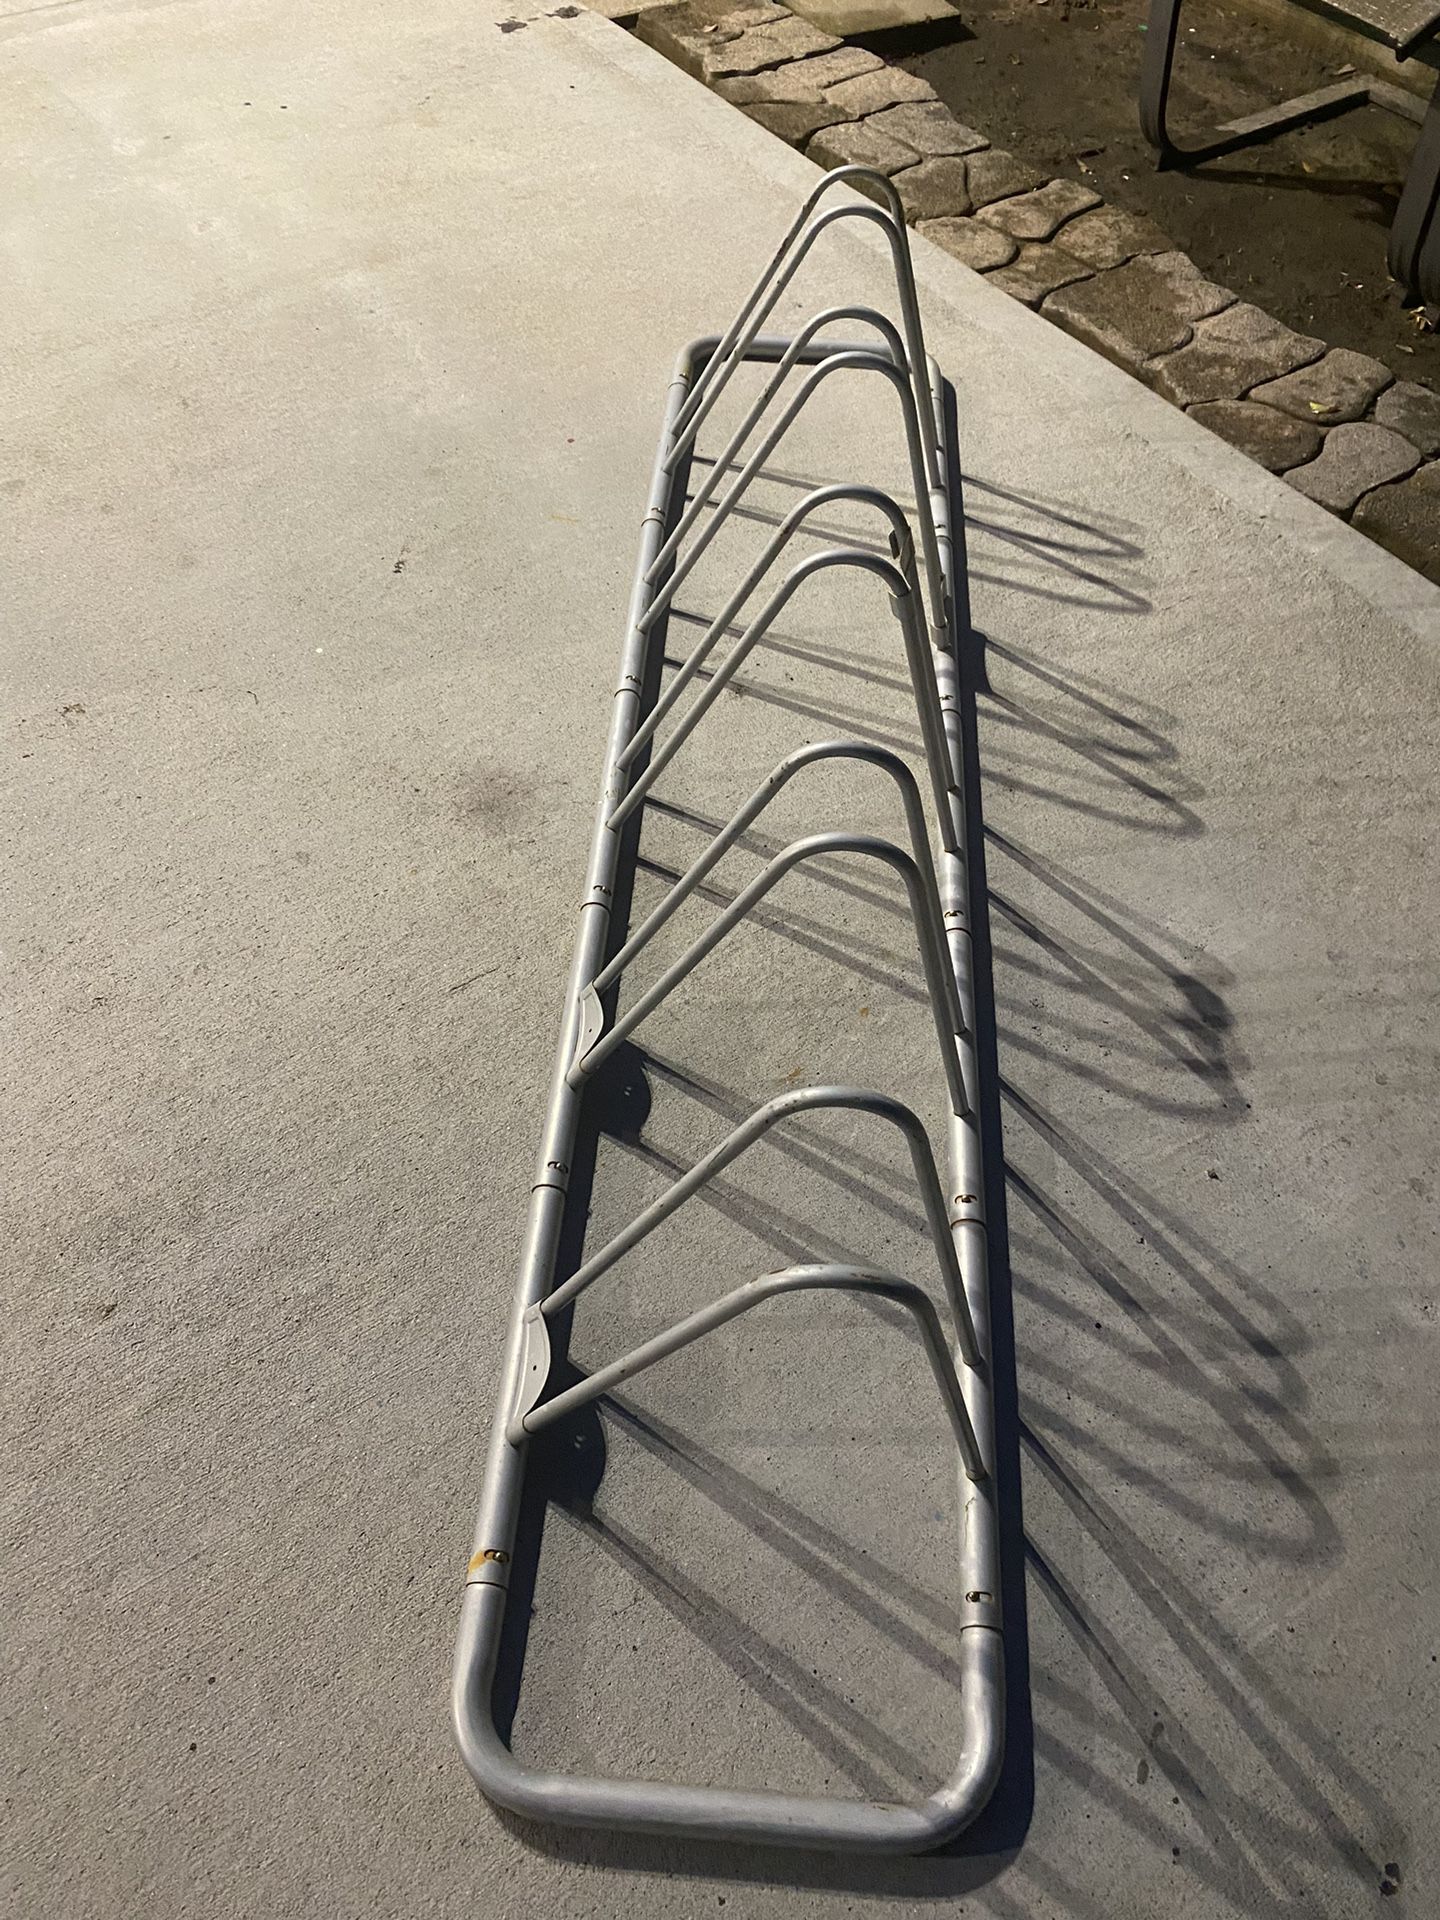 5 Bike stand / Parking Rack